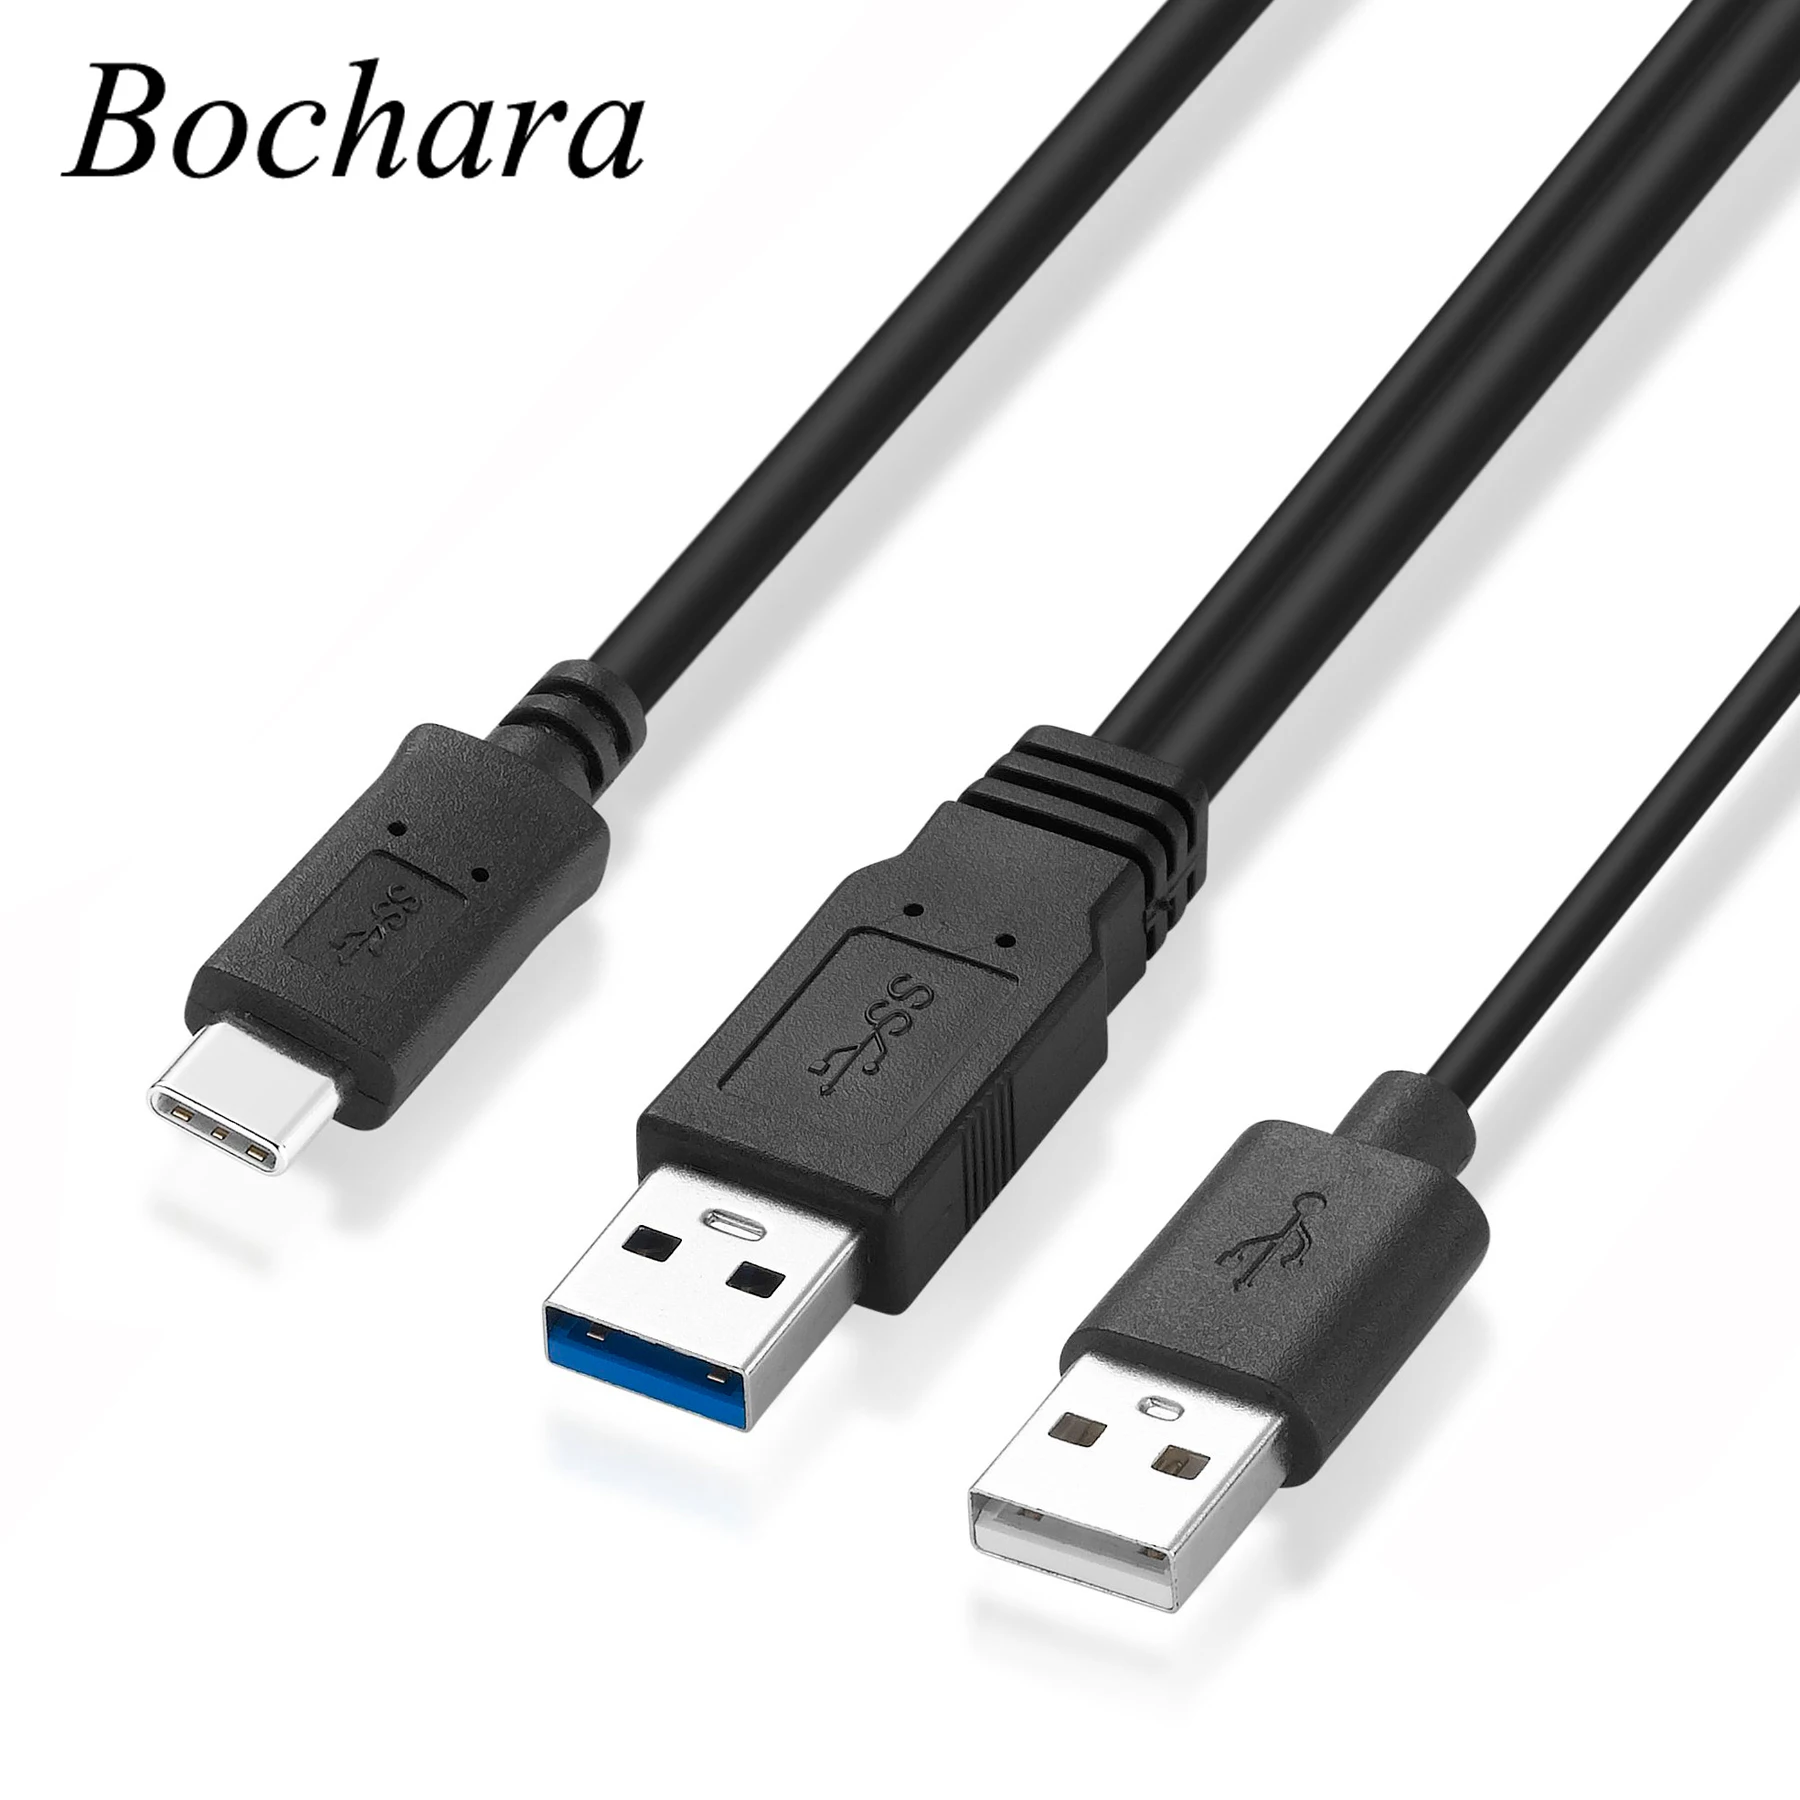 Bochara-Cable de datos 2 en 1 USB 3,0 tipo A macho A...